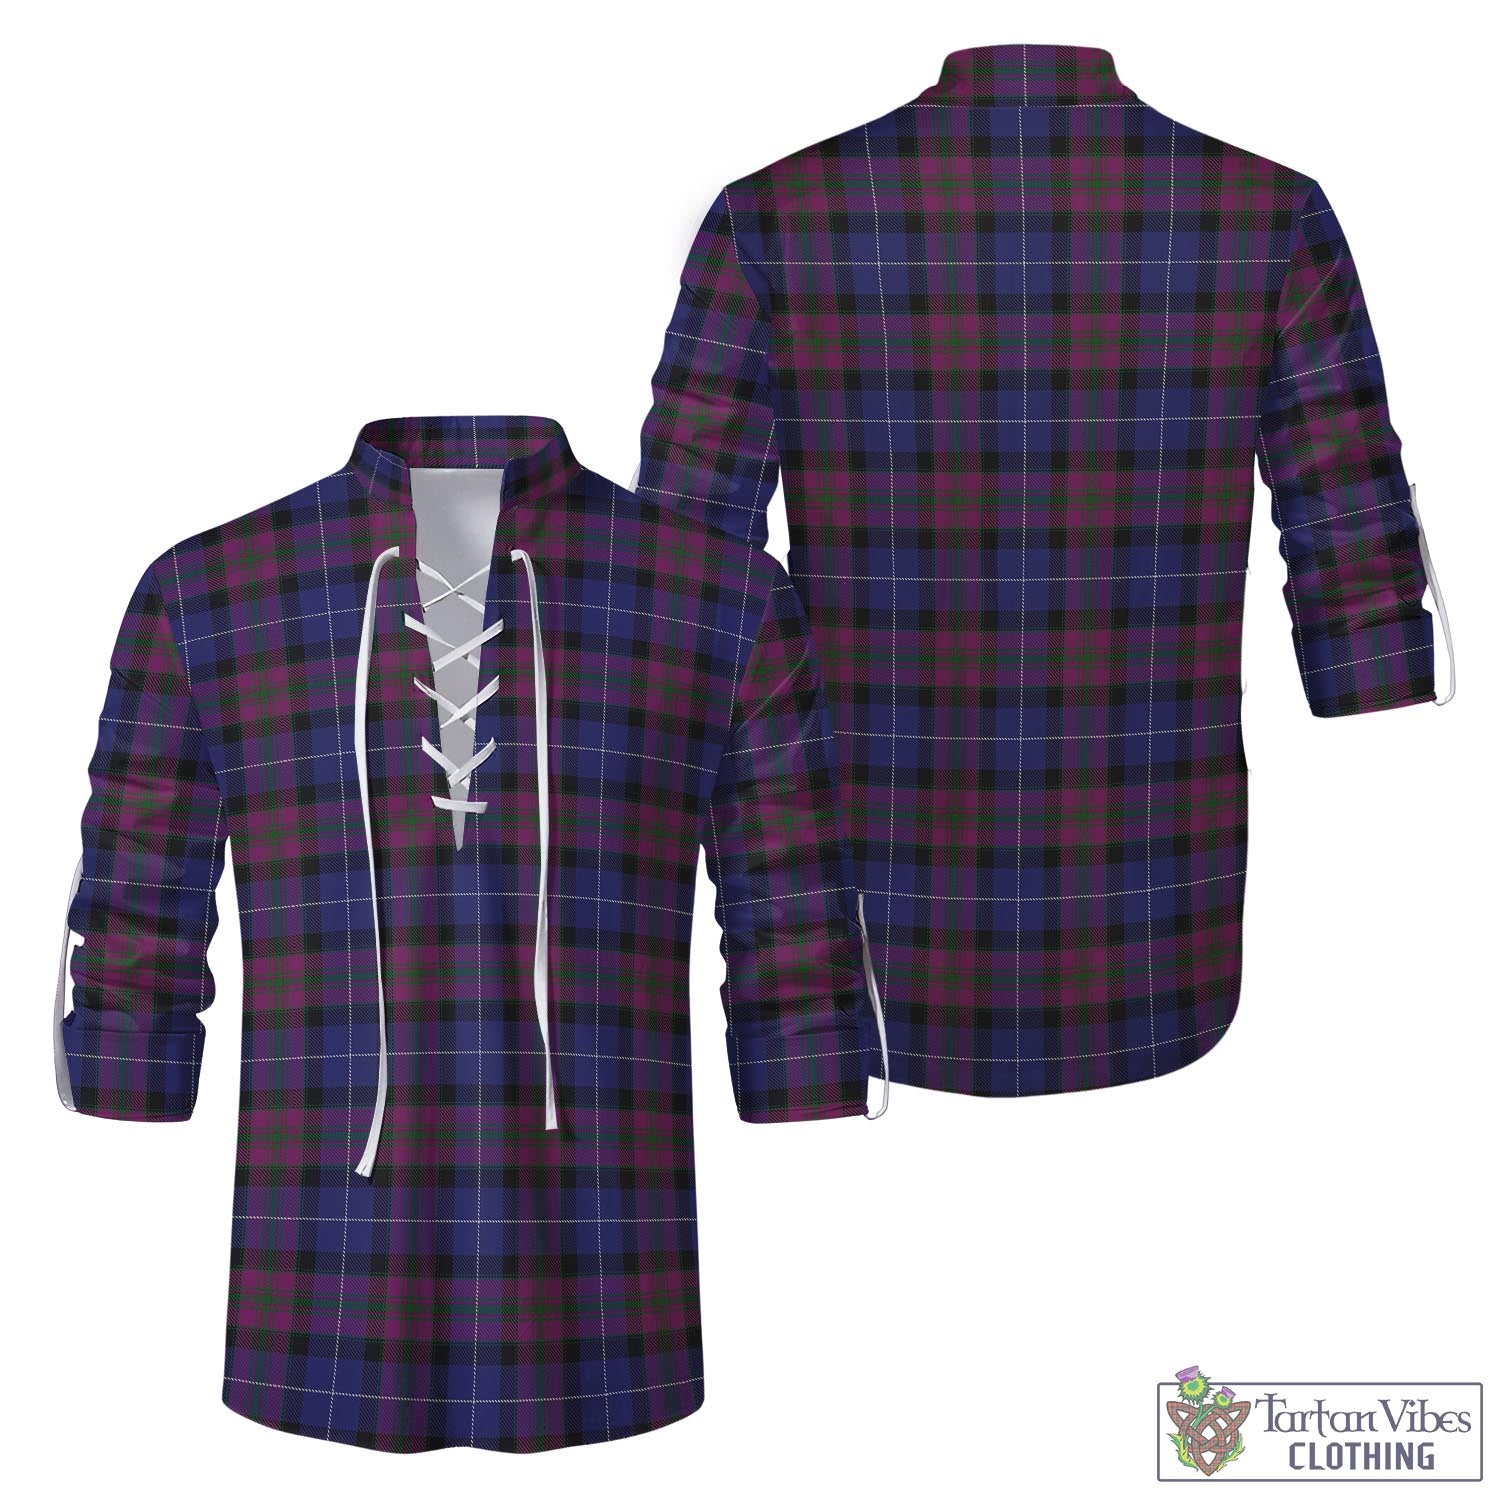 Tartan Vibes Clothing Pride of Scotland Tartan Men's Scottish Traditional Jacobite Ghillie Kilt Shirt